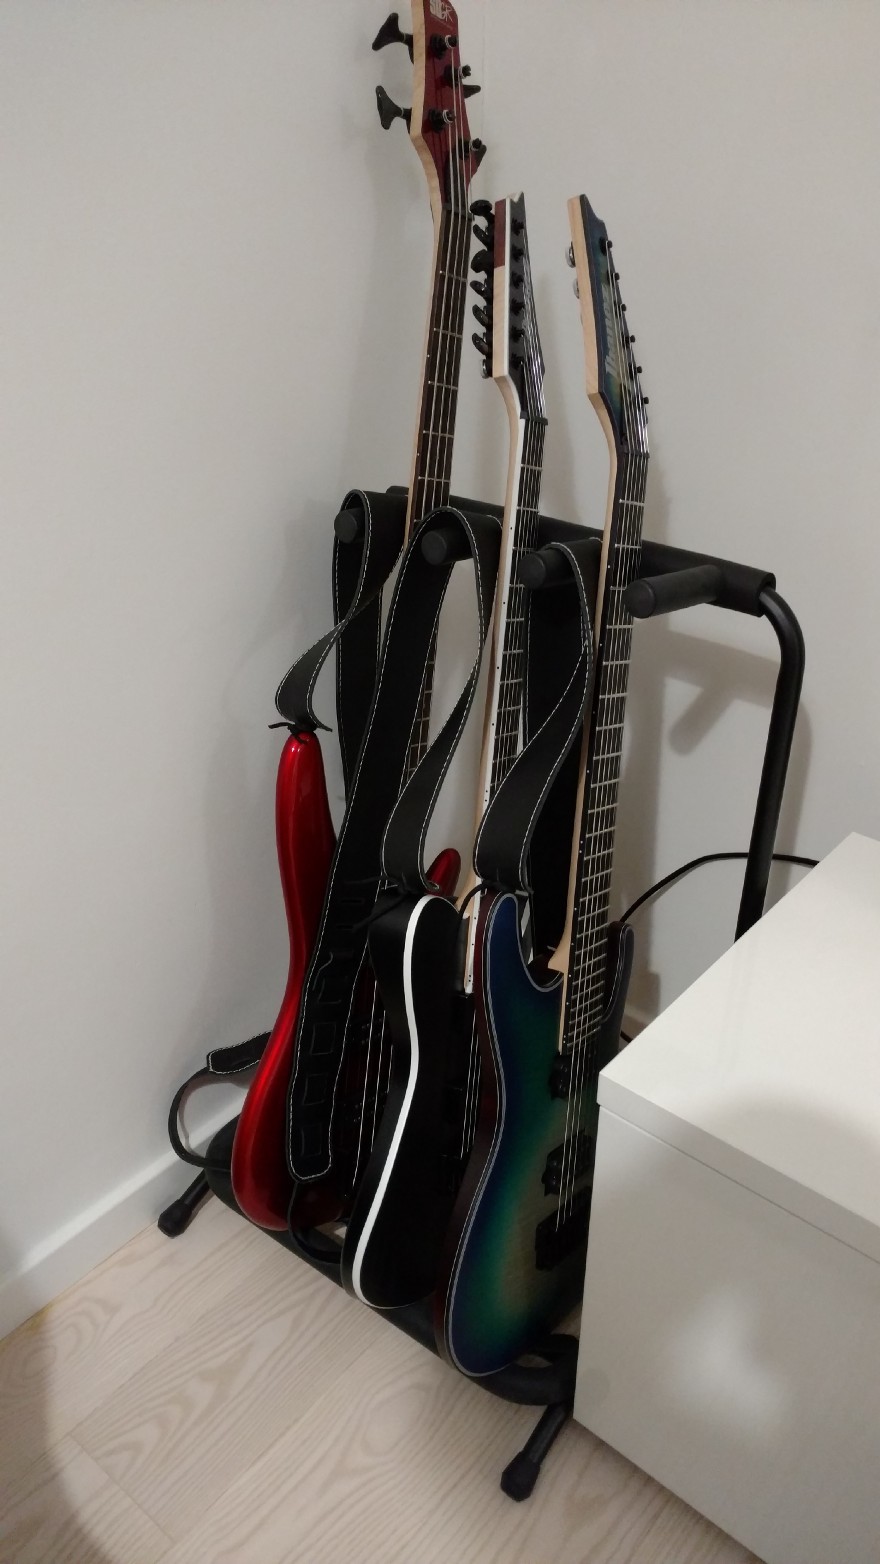 Current set of guitars